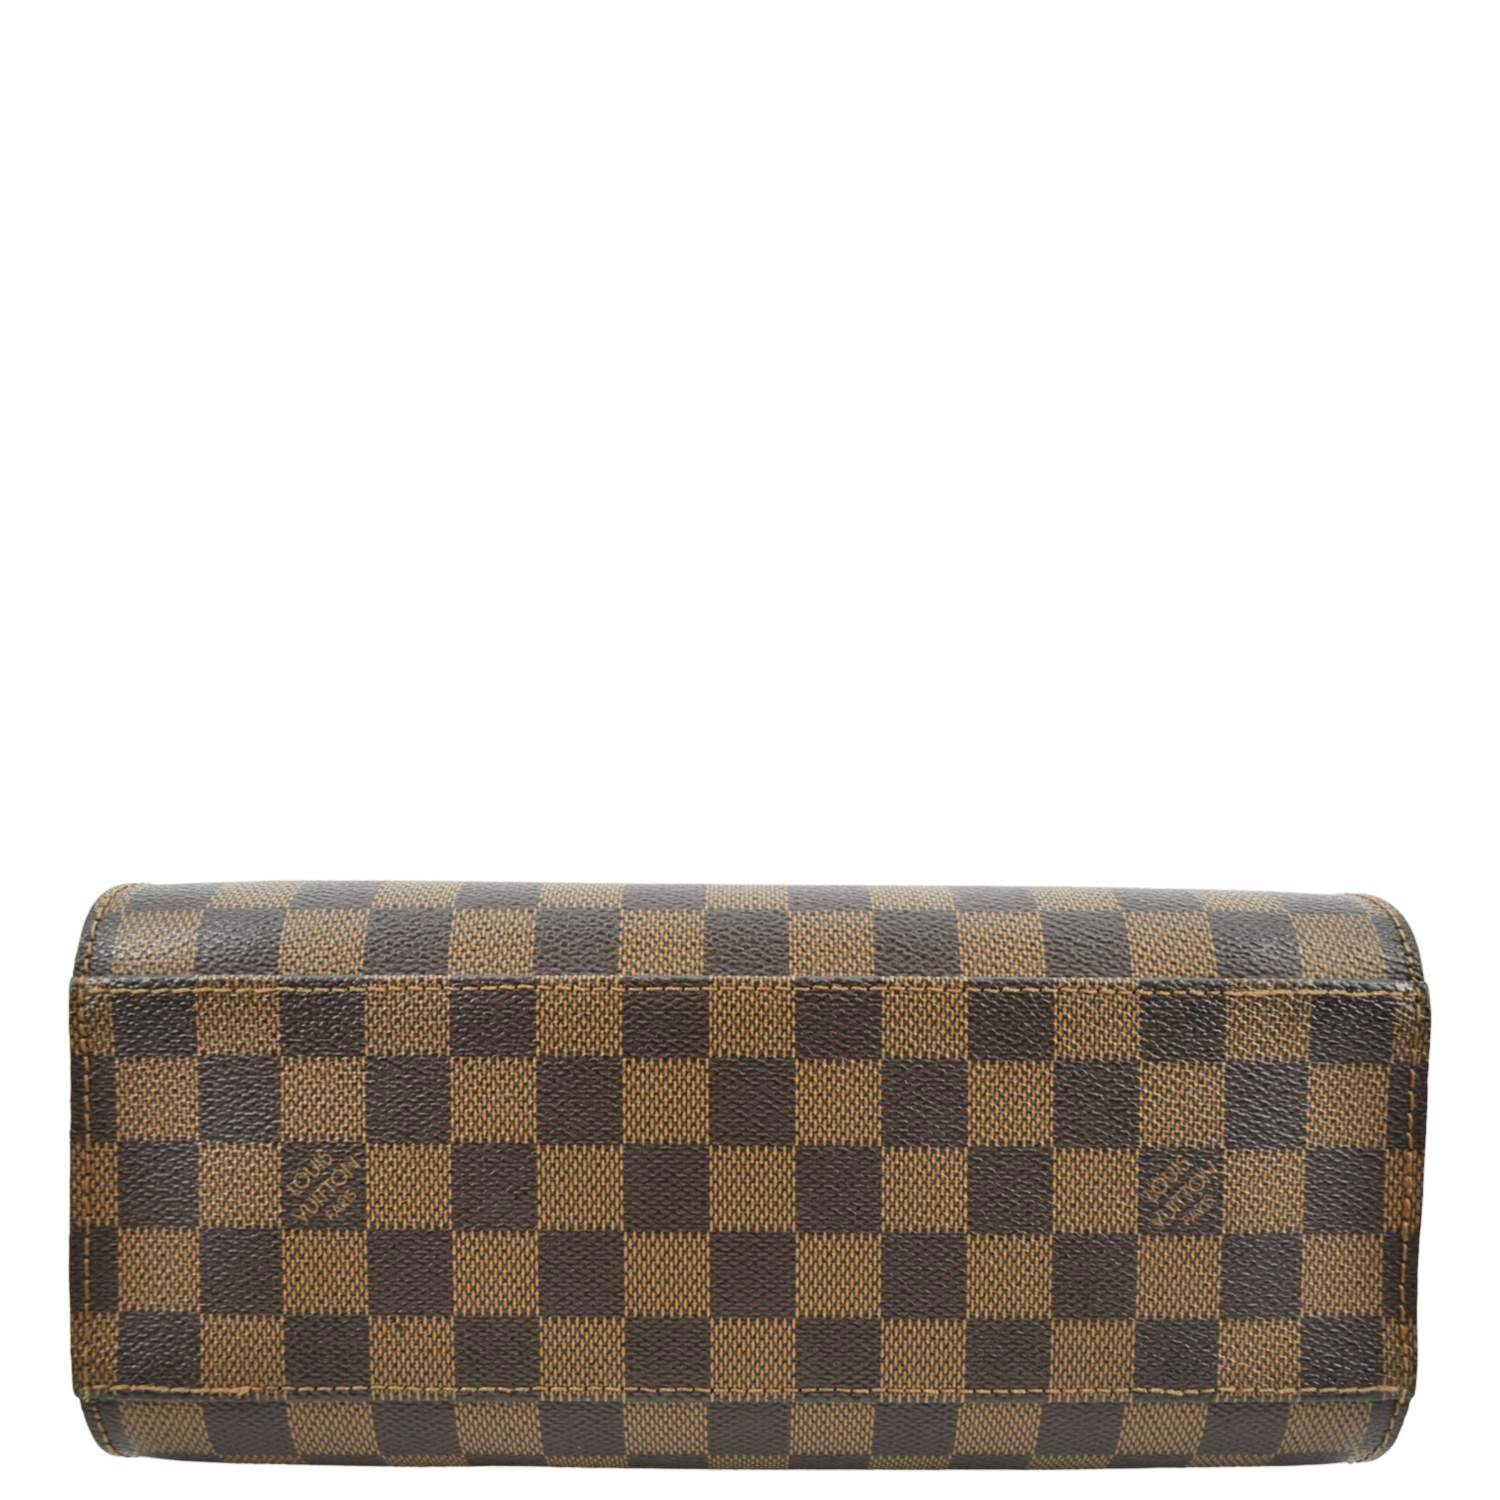 Authentic Louis Vuitton Damier Ebene Triana Leather Handbag Purse